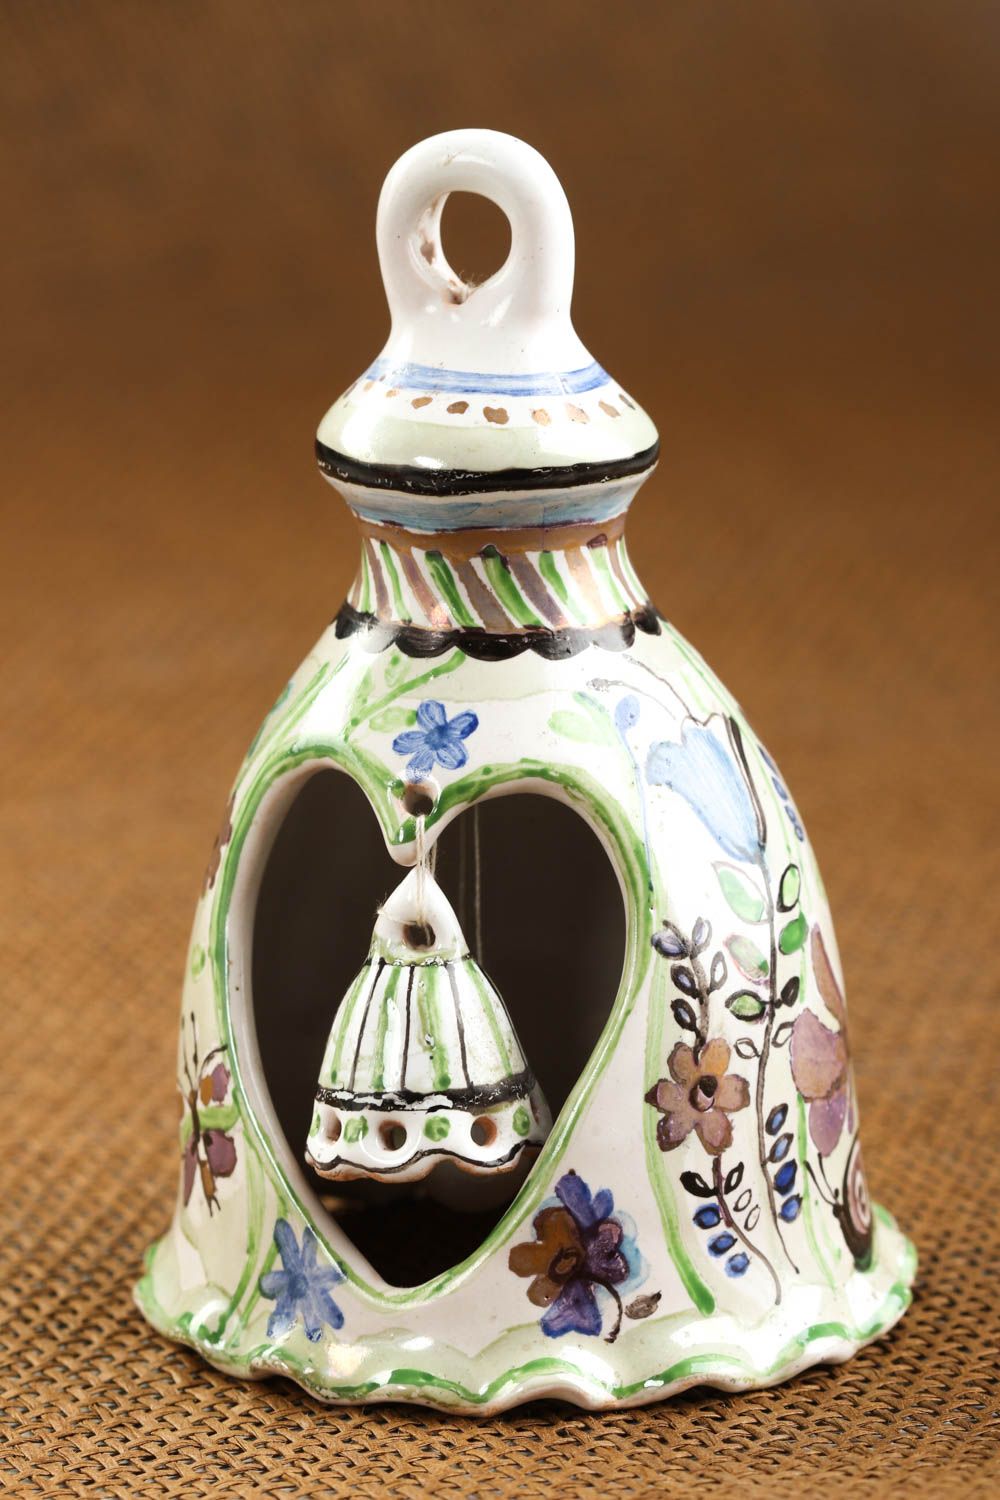 Souvenir handmade ceramic bell home design pottery works decorative use only photo 1